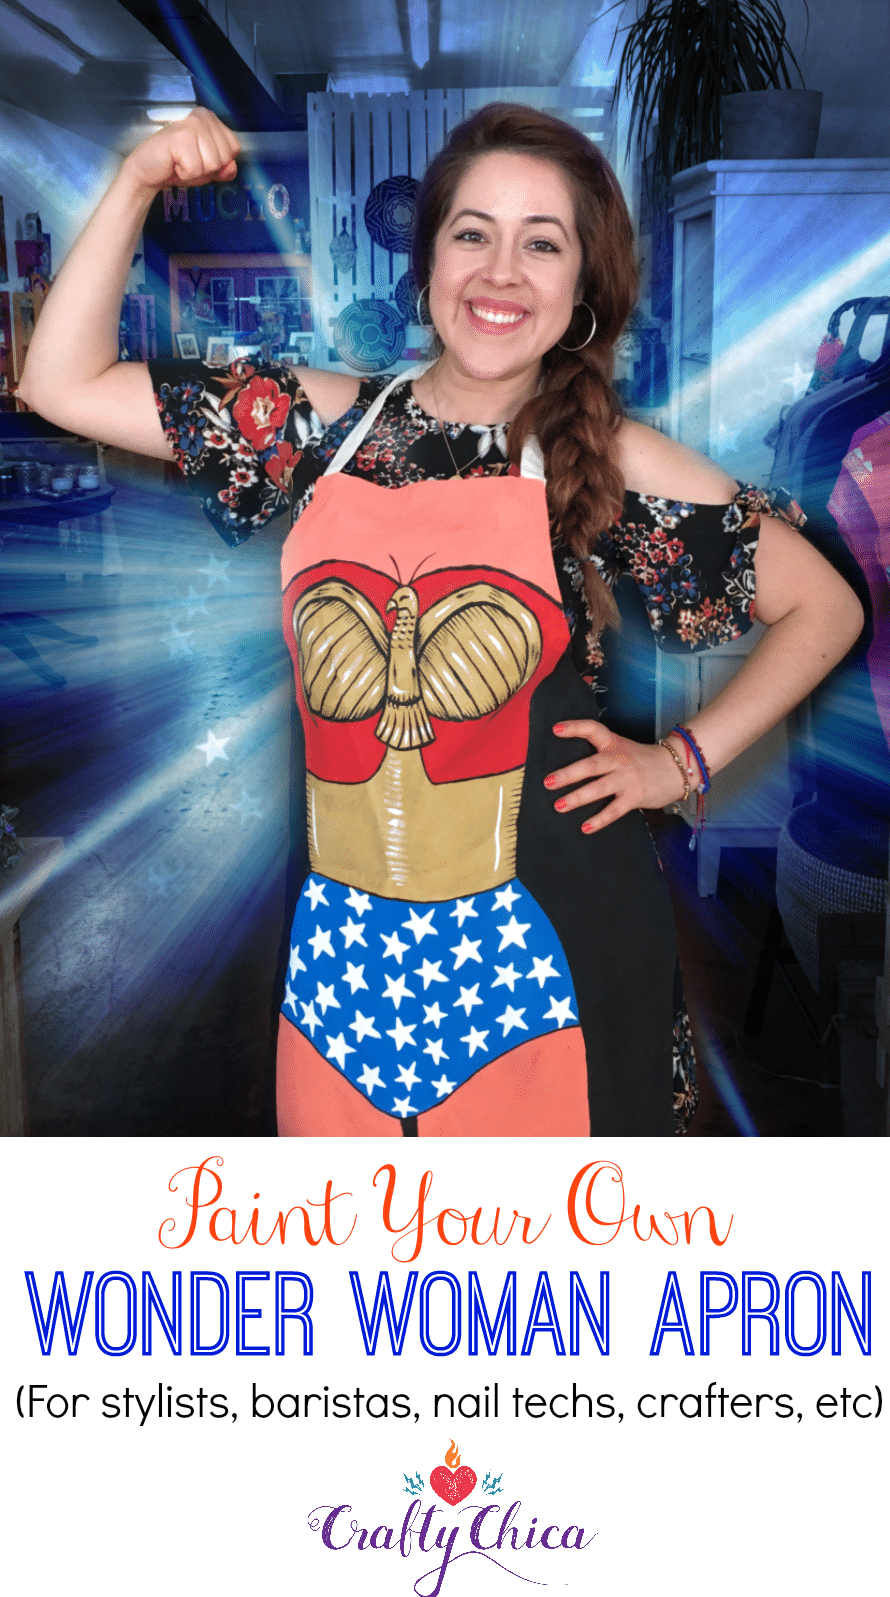 Wonder Woman apron idea!